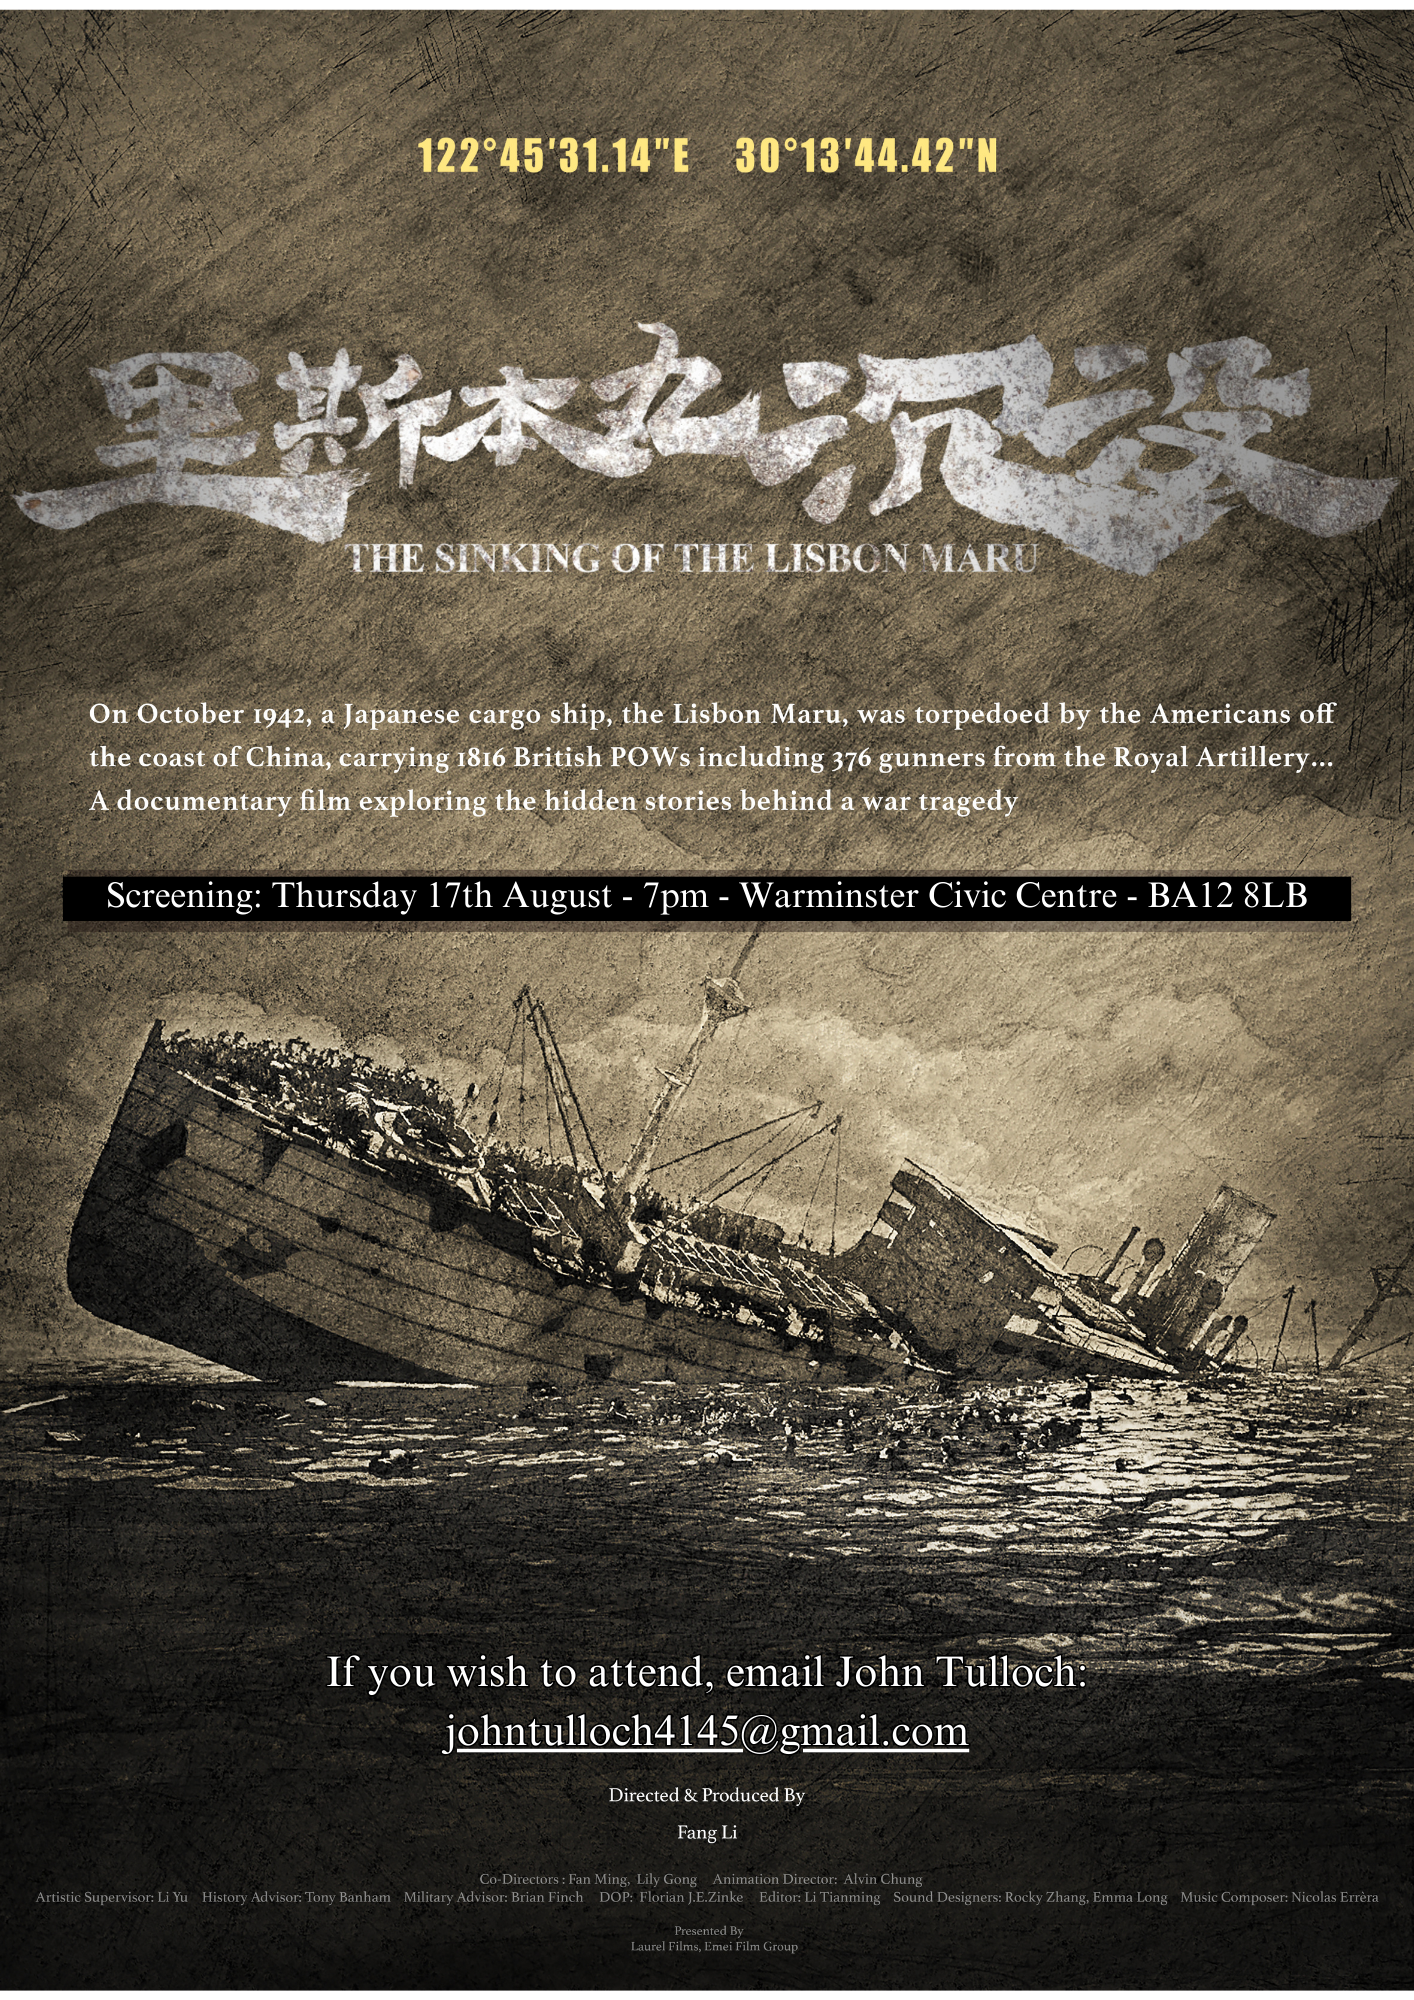 Film Screening: "The Sinking of the Lisbon Maru"